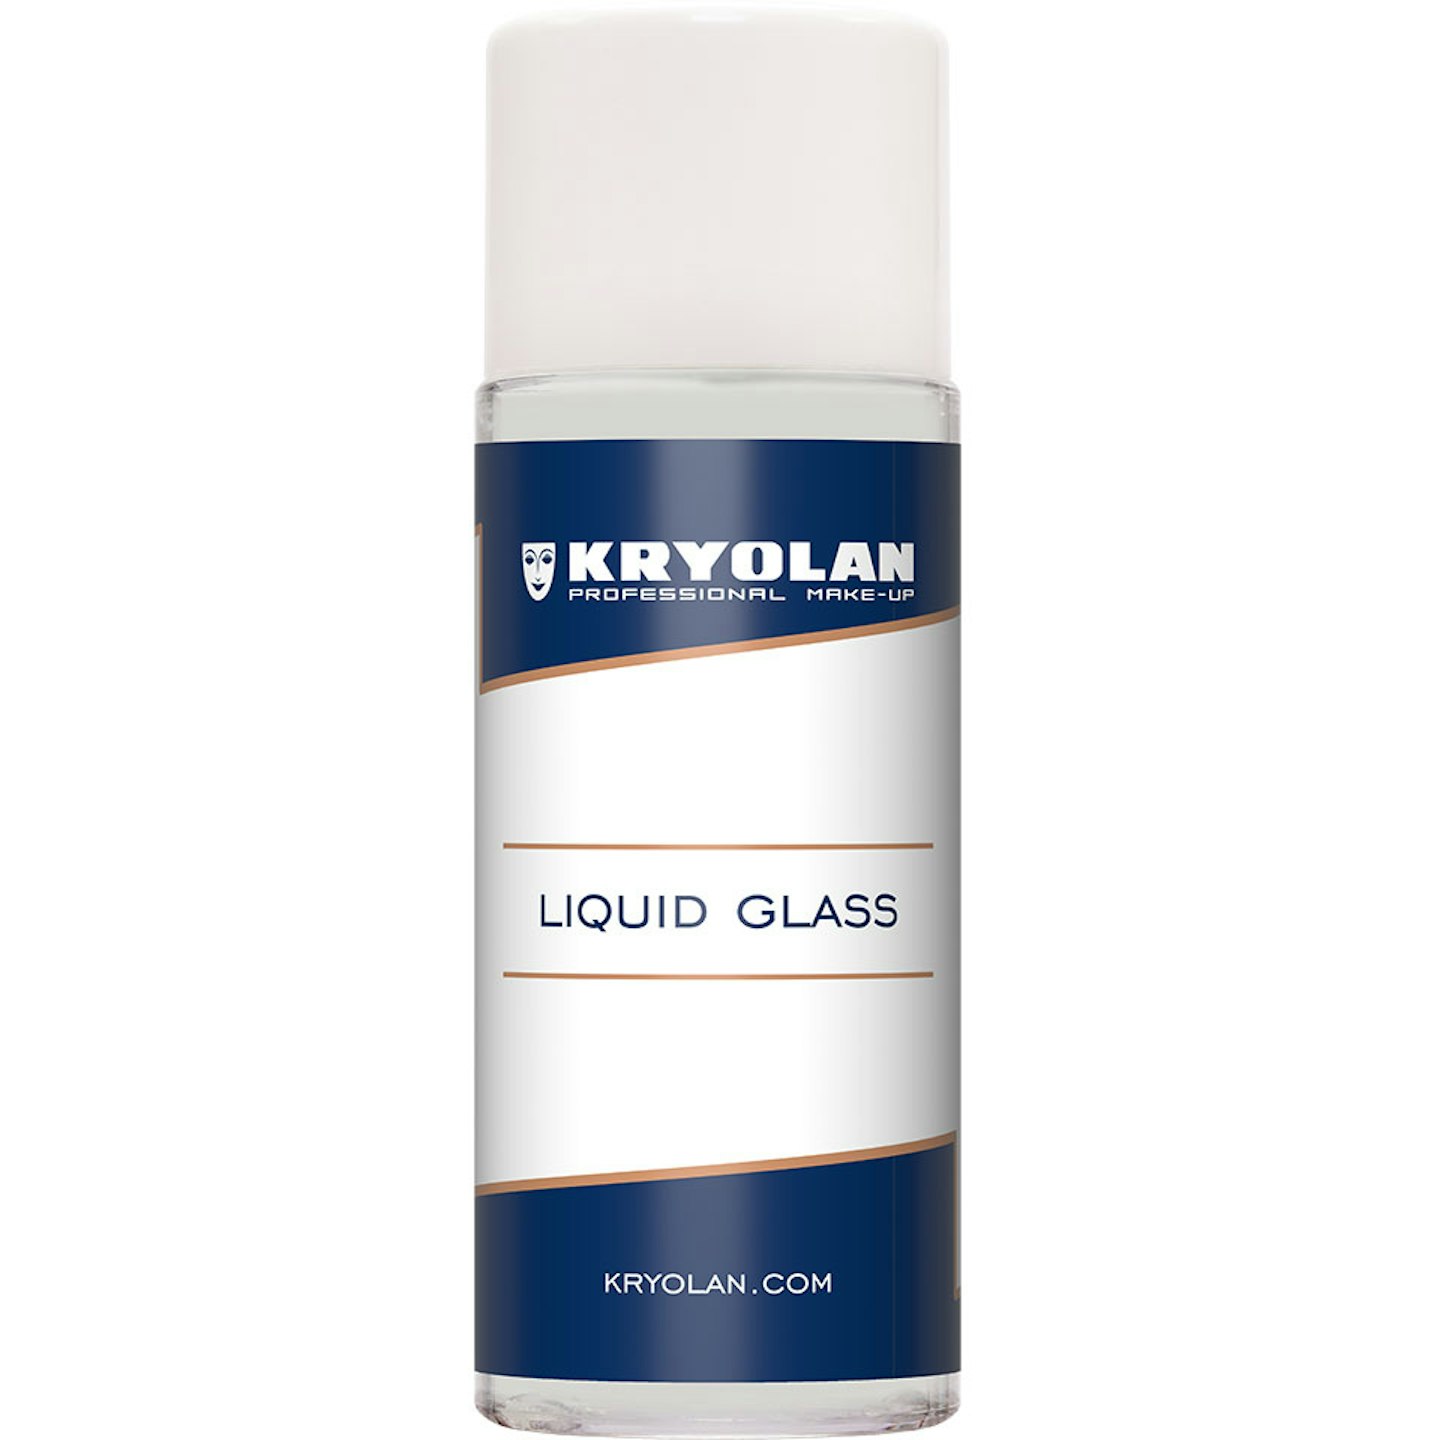 Kryolan Liquid Glass